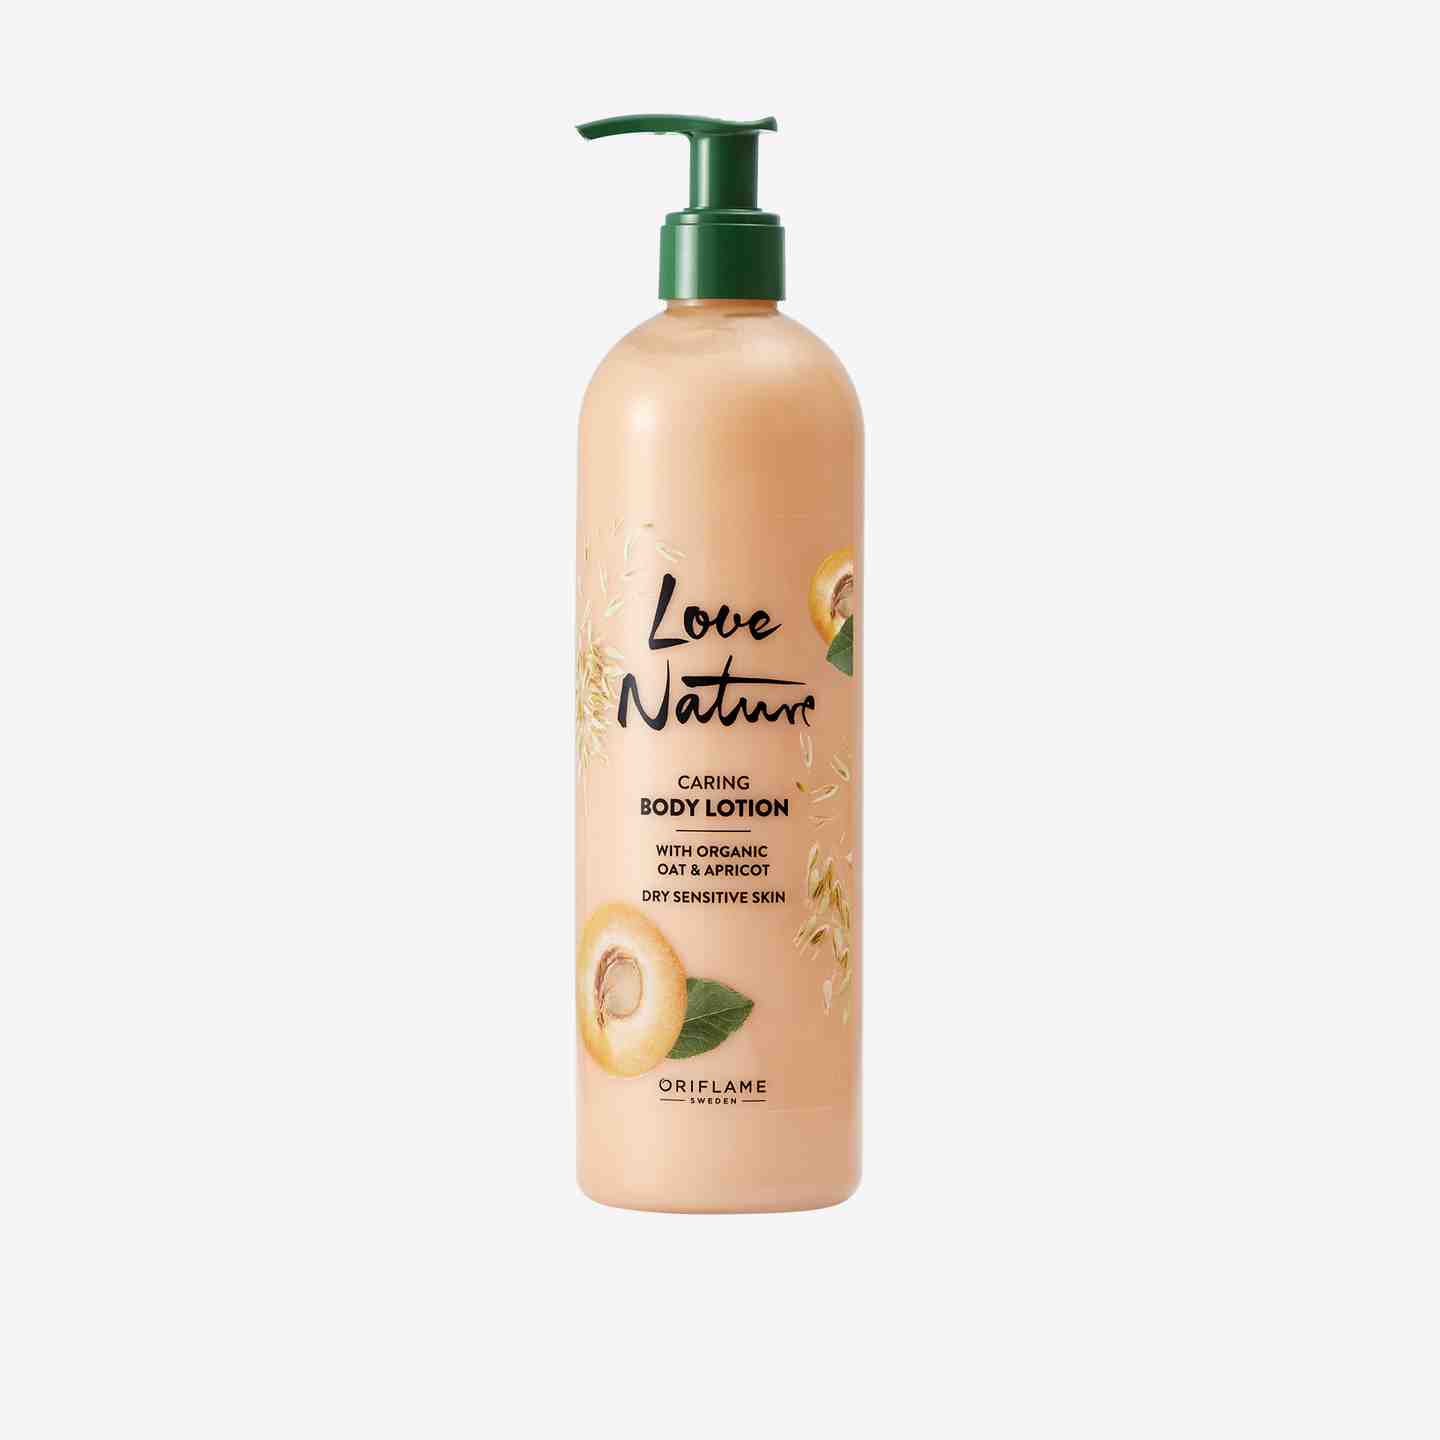 Caring Body Lotion with Organic Oat & Apricot (41492) body-moisturiser –  Bath & Body